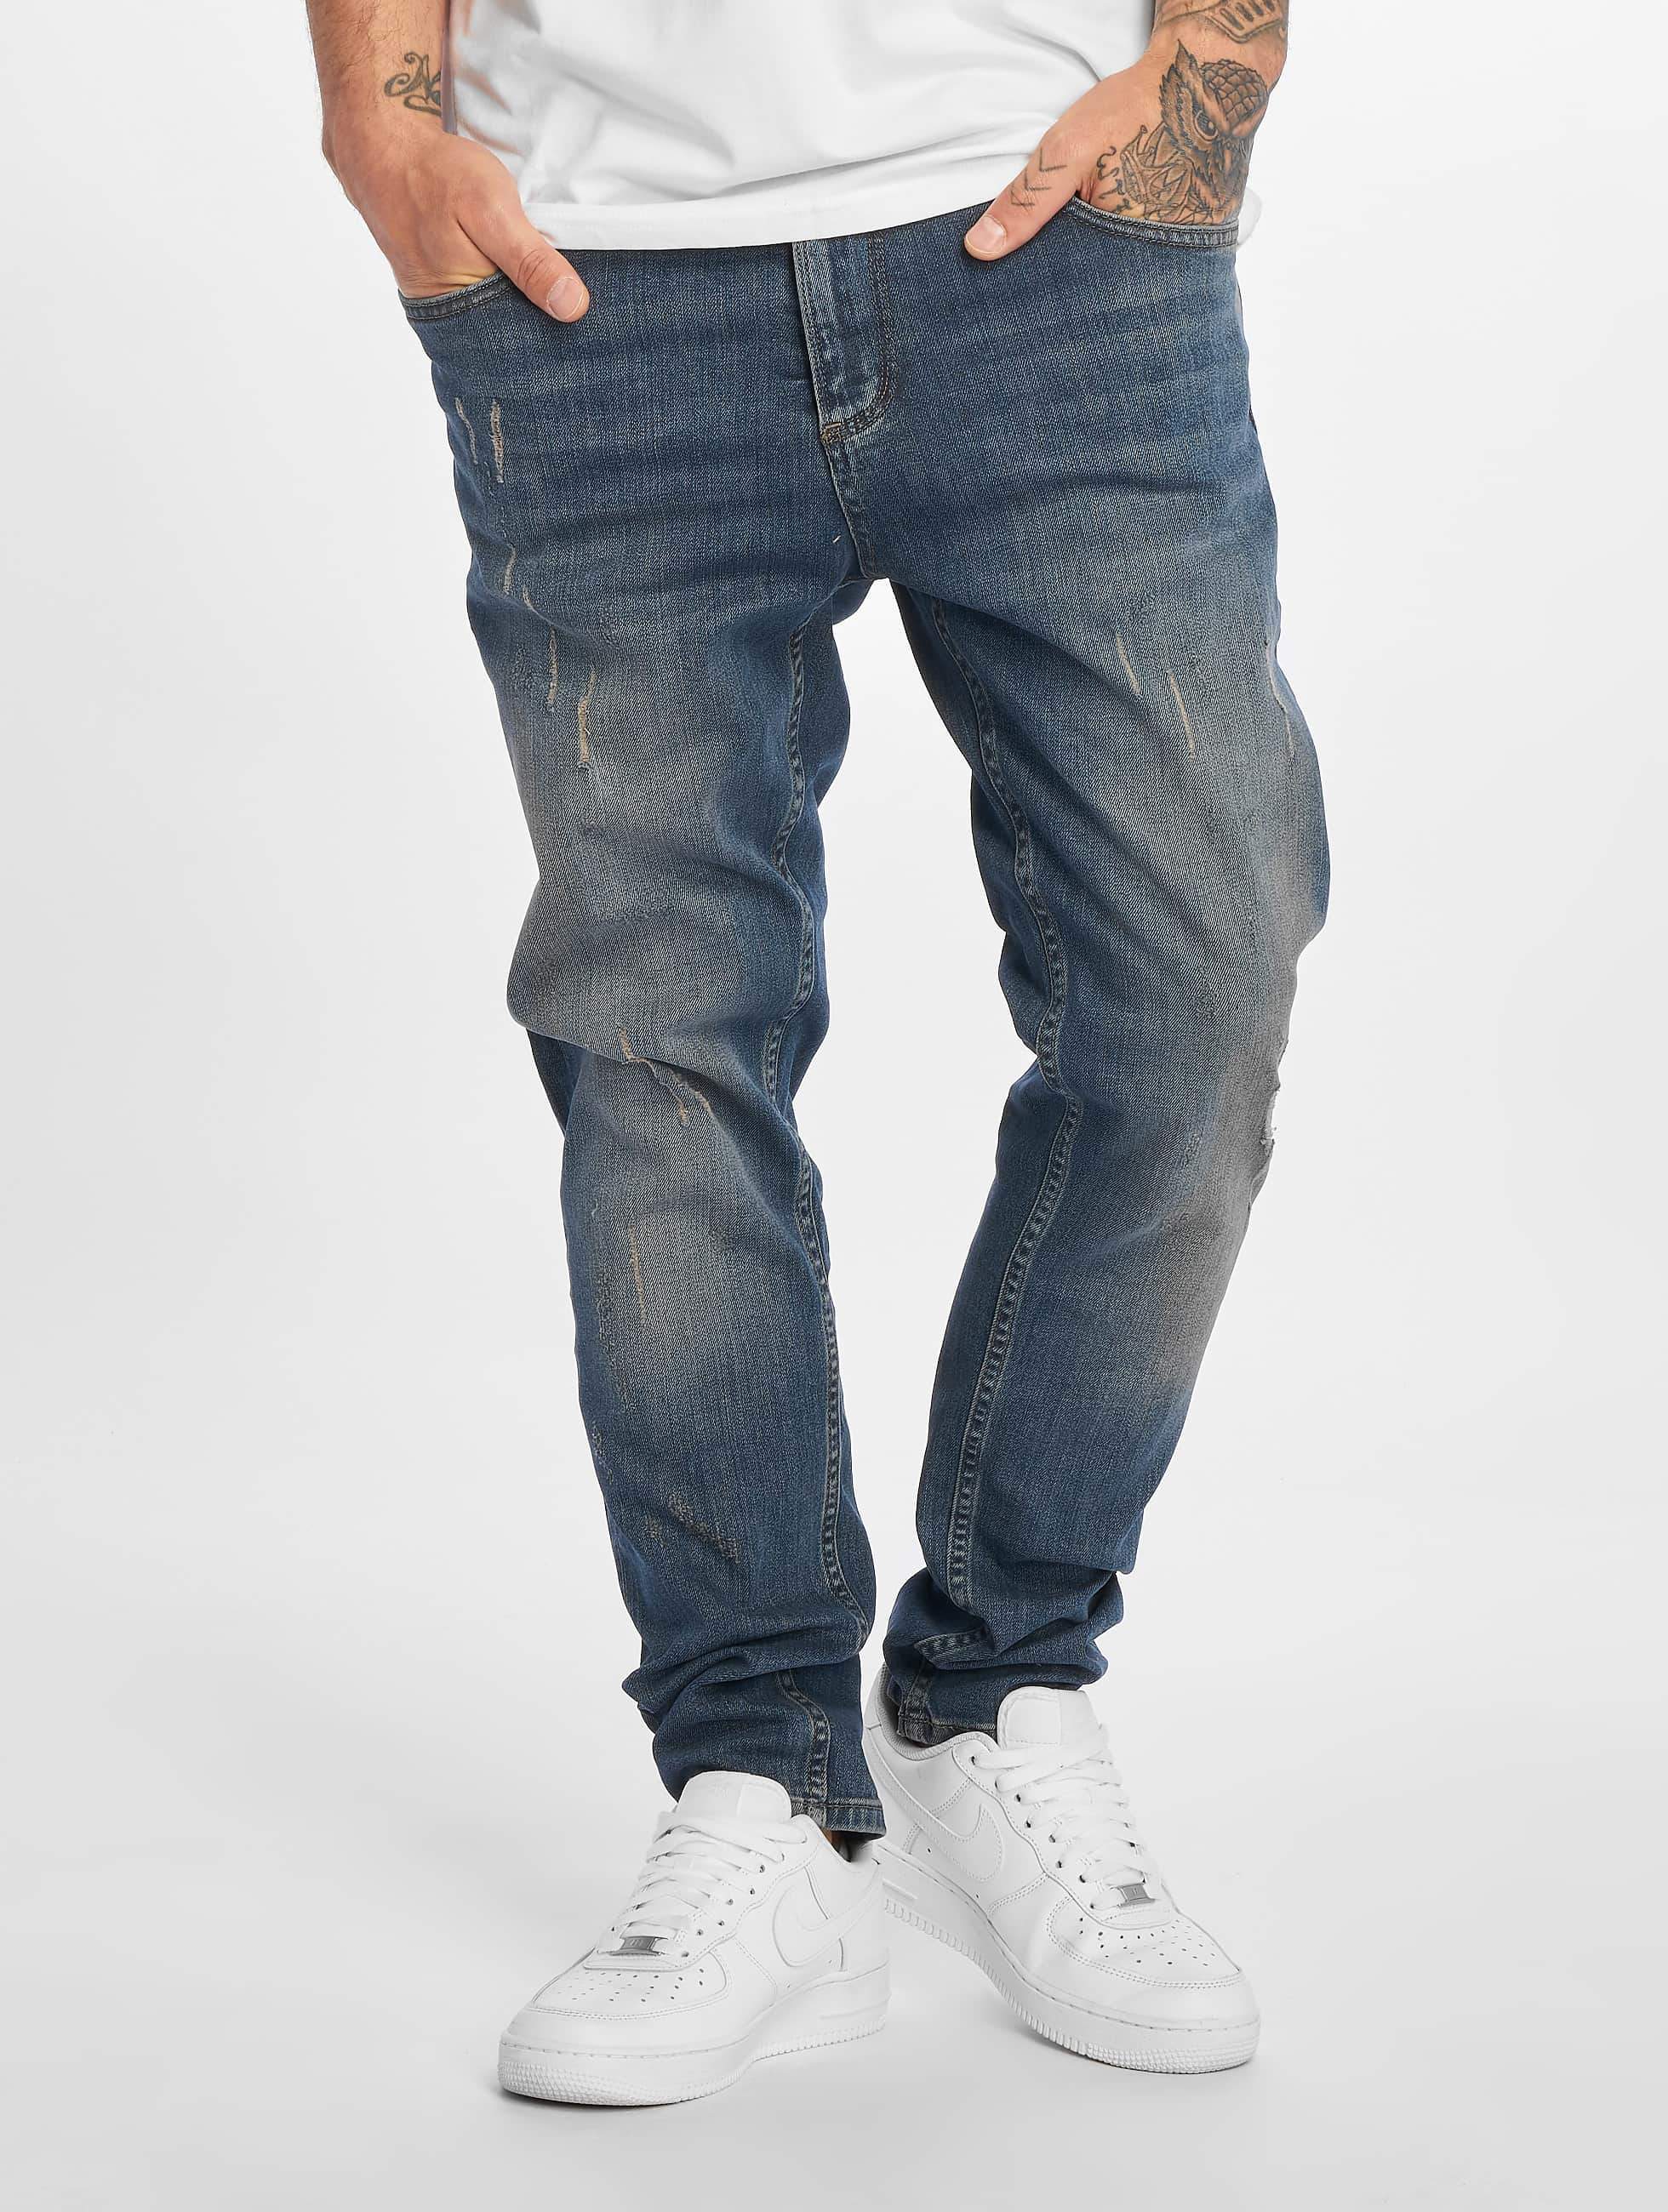 presentatie Pardon laag DEF Jeans / Slim Fit Jeans Tommy in blauw 457380